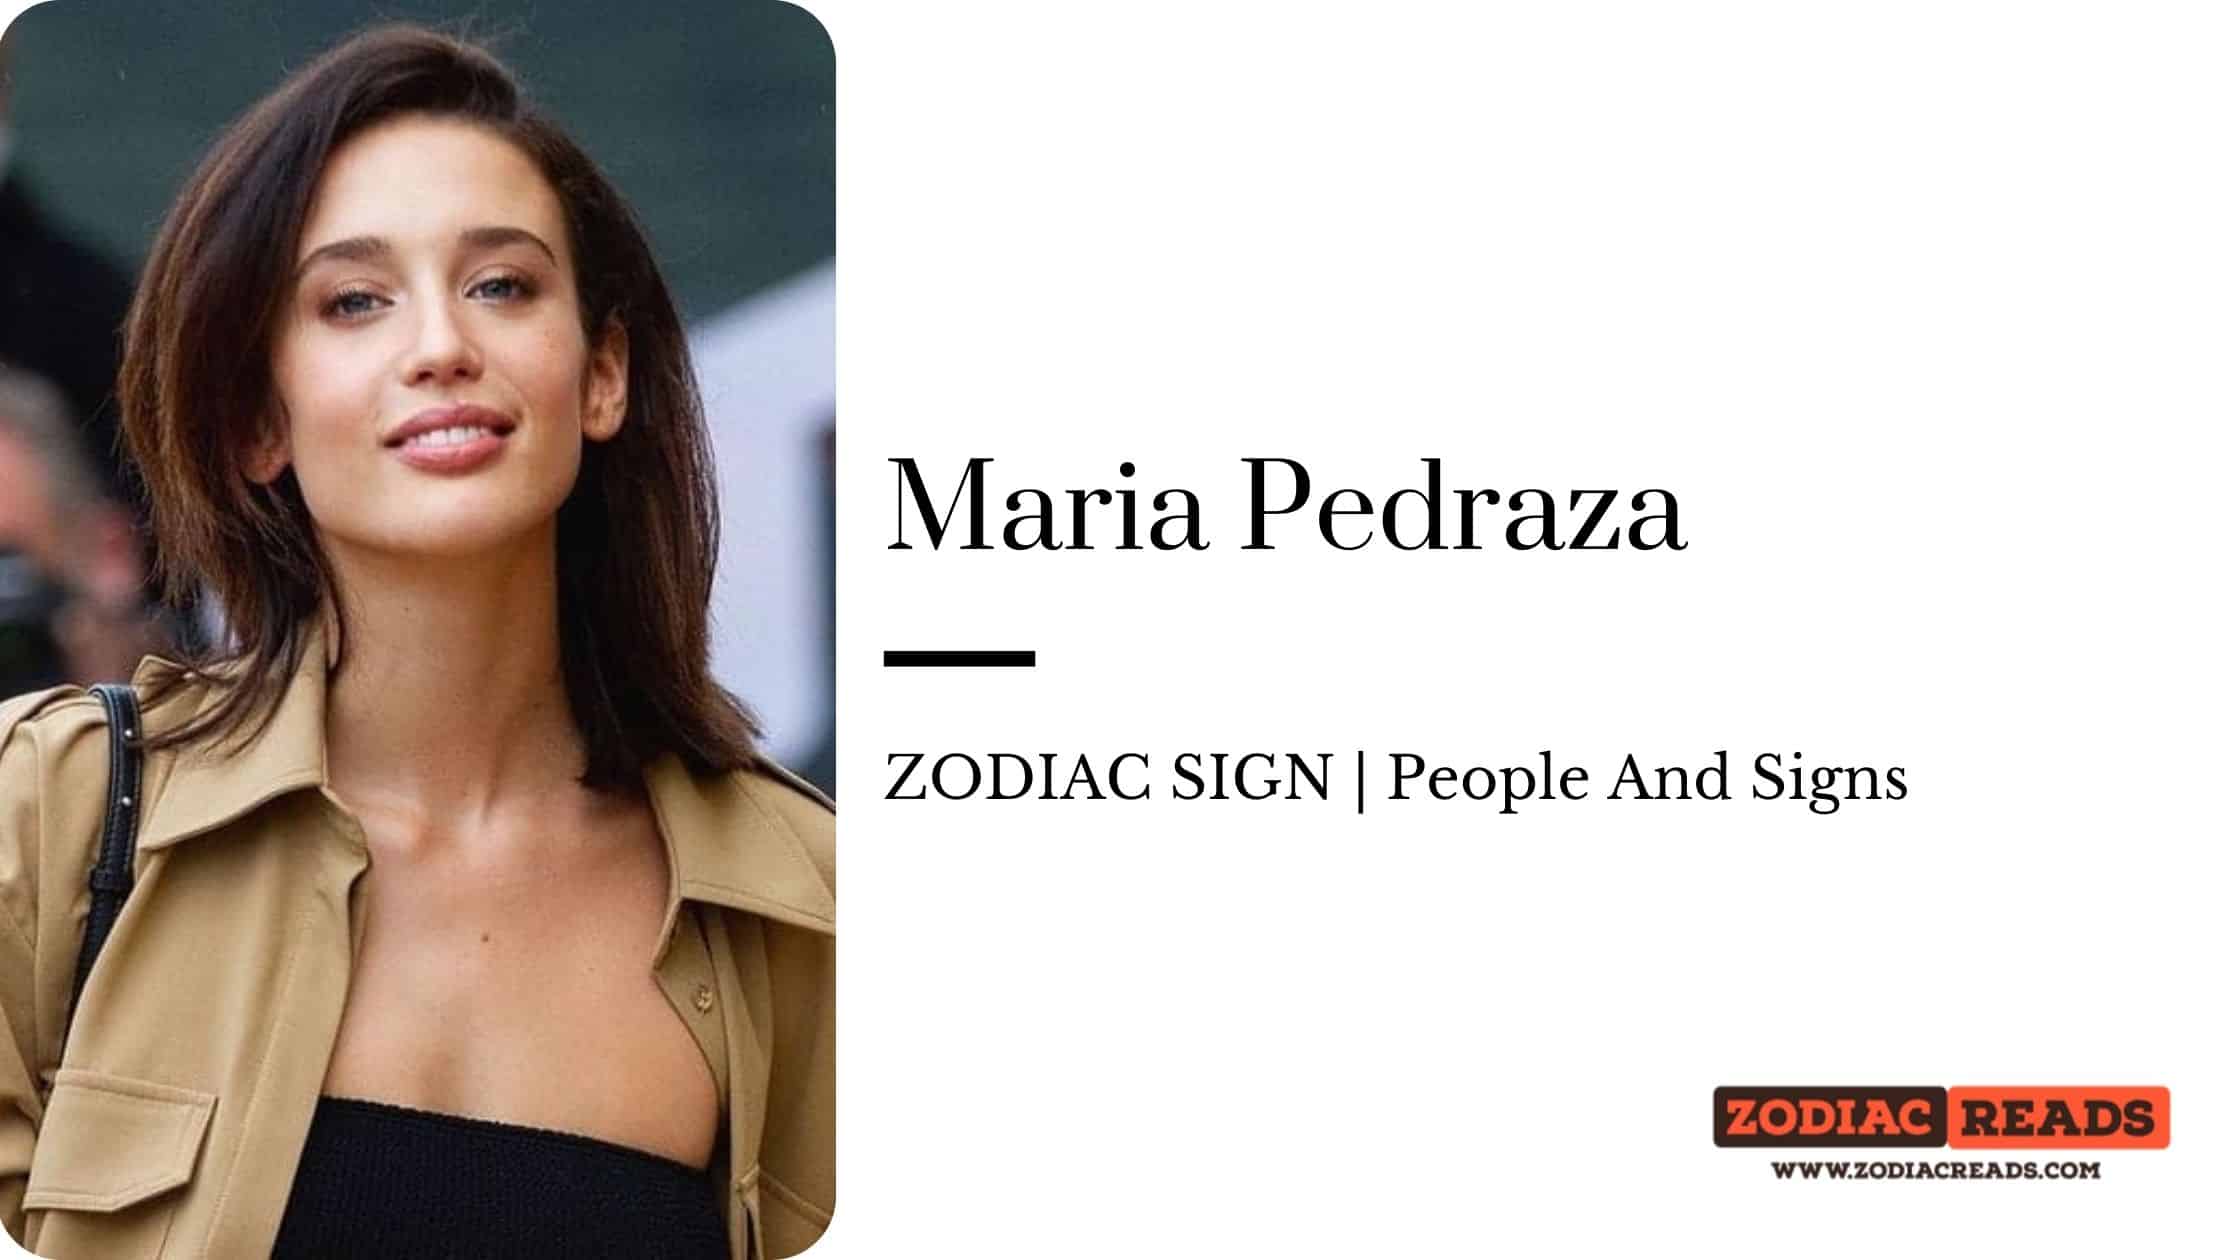 Maria Pedraza zodiac